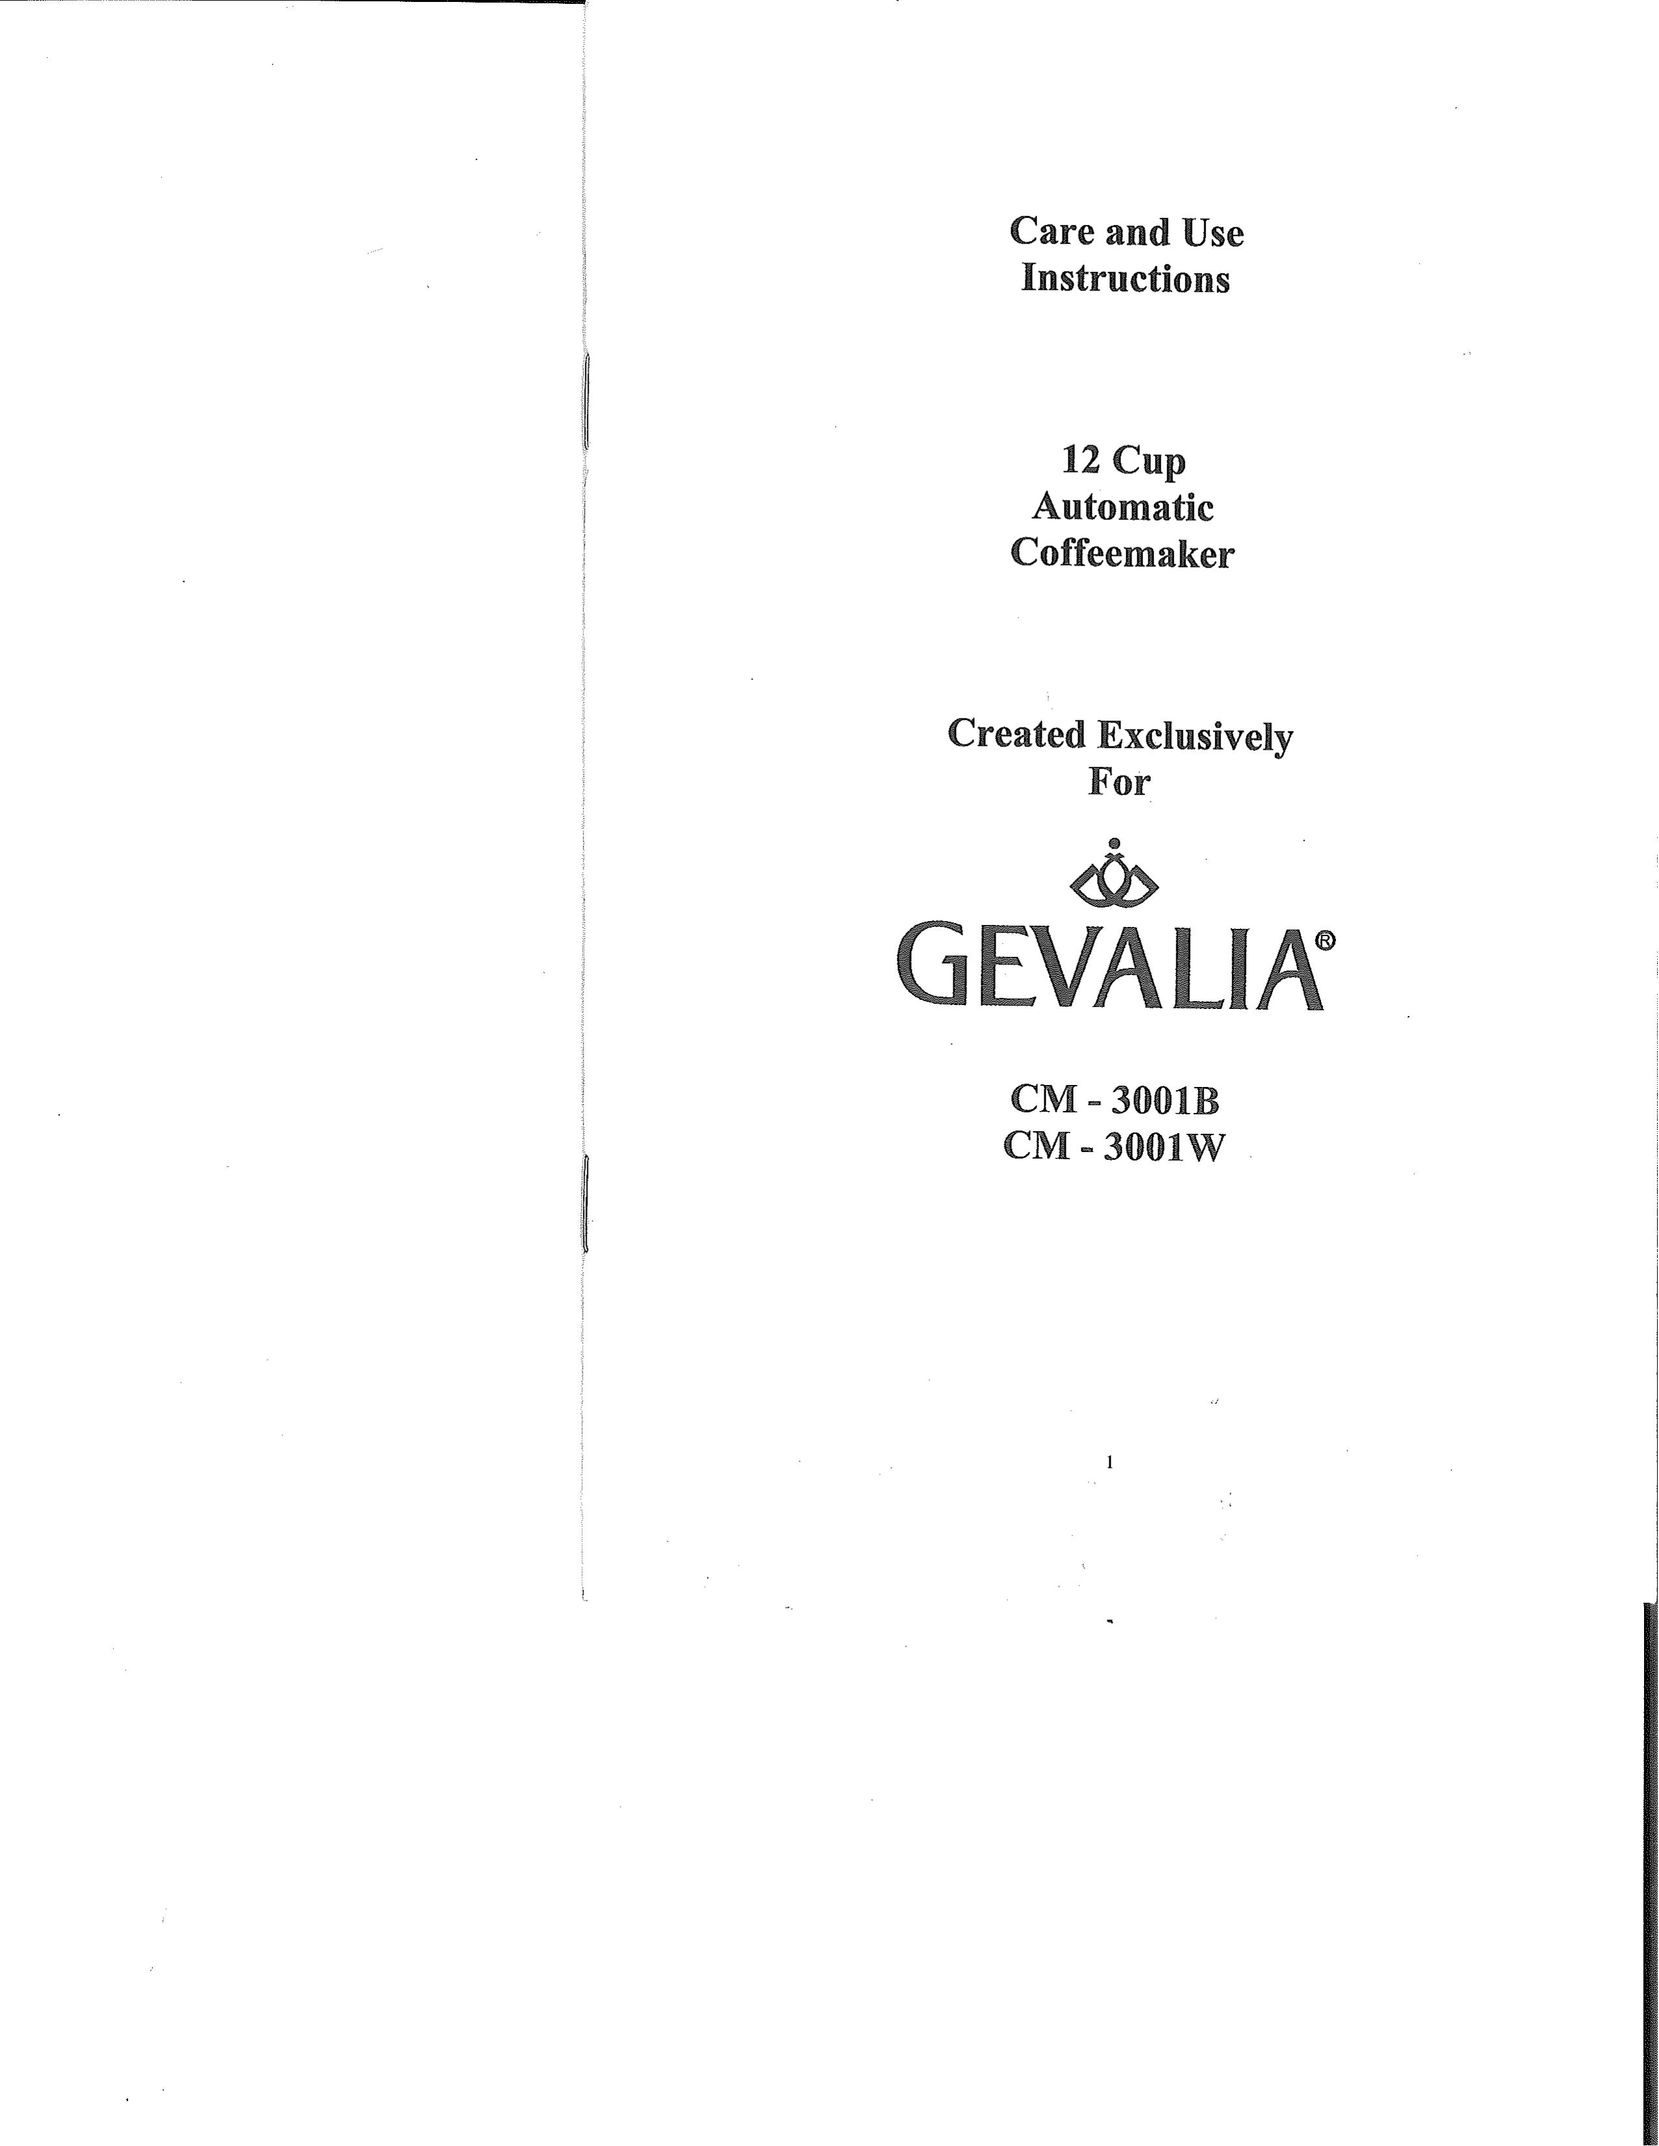 Gevalia CM-3001W Coffeemaker User Manual